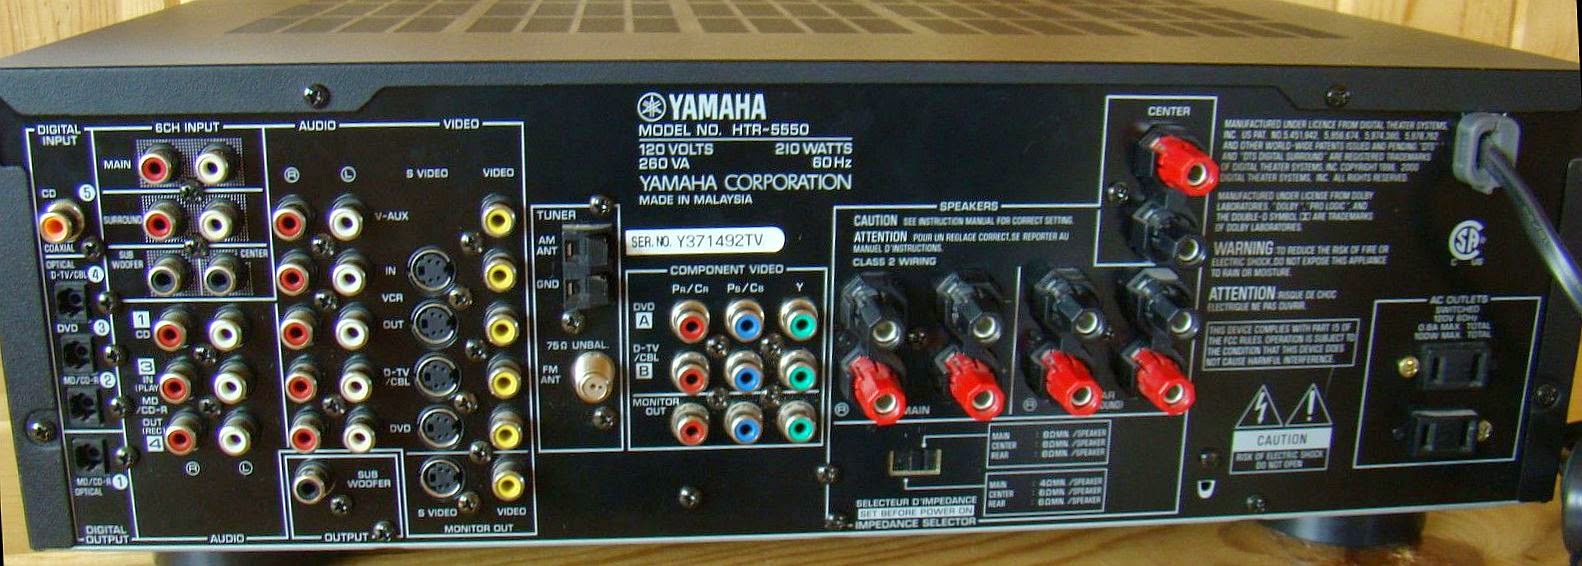 Yamaha HTR-5550 - AV Receiver | AudioBaza